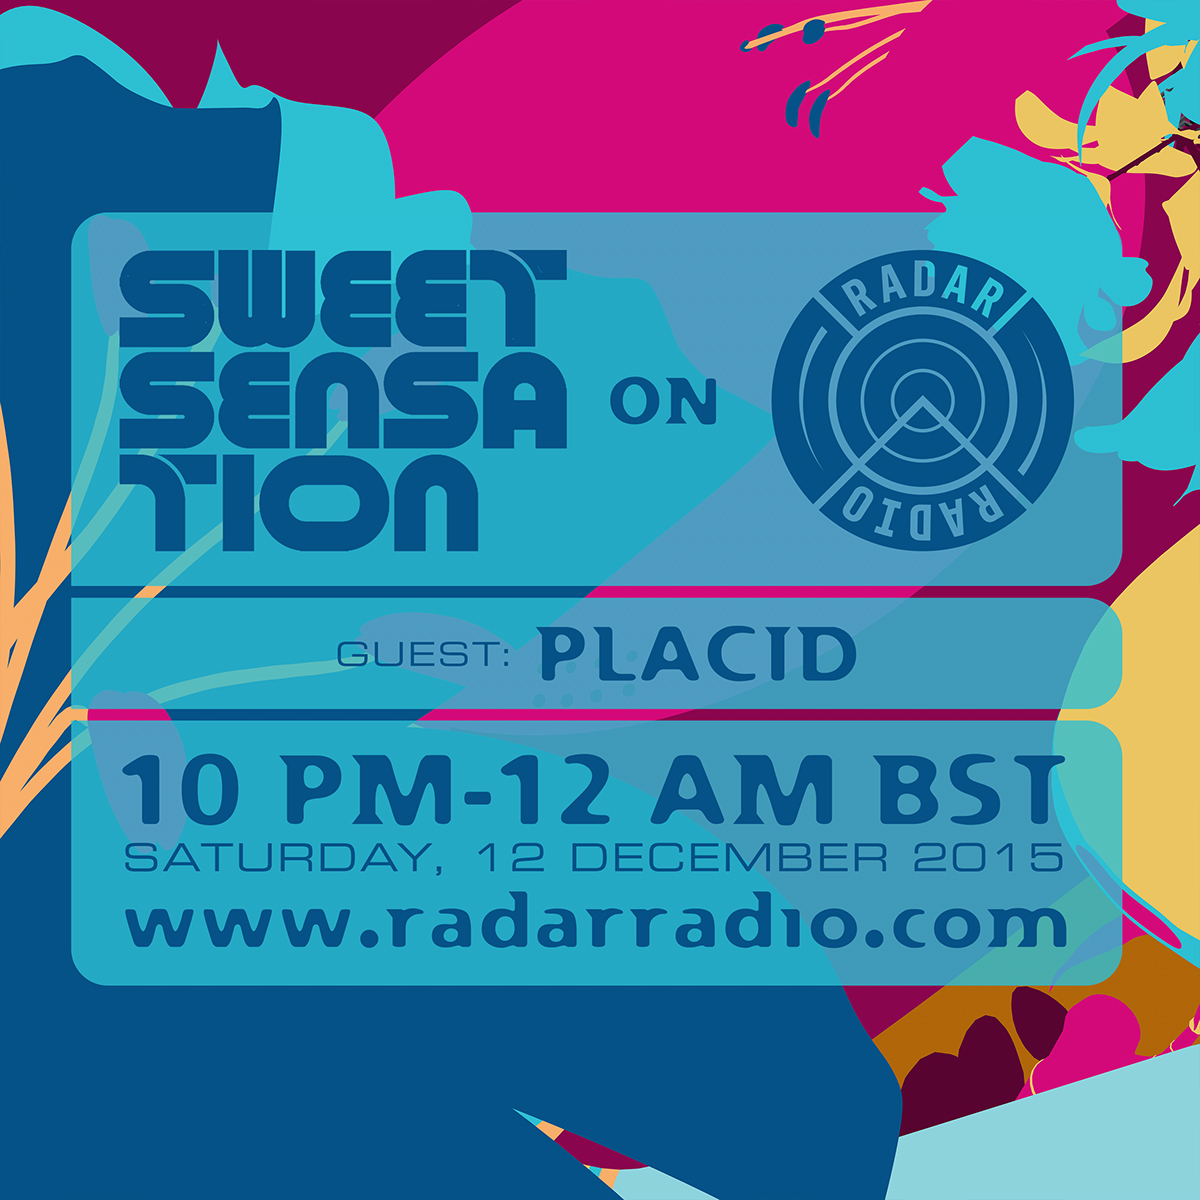 Sweet Sensation radar radio Bristol UK rave flyer